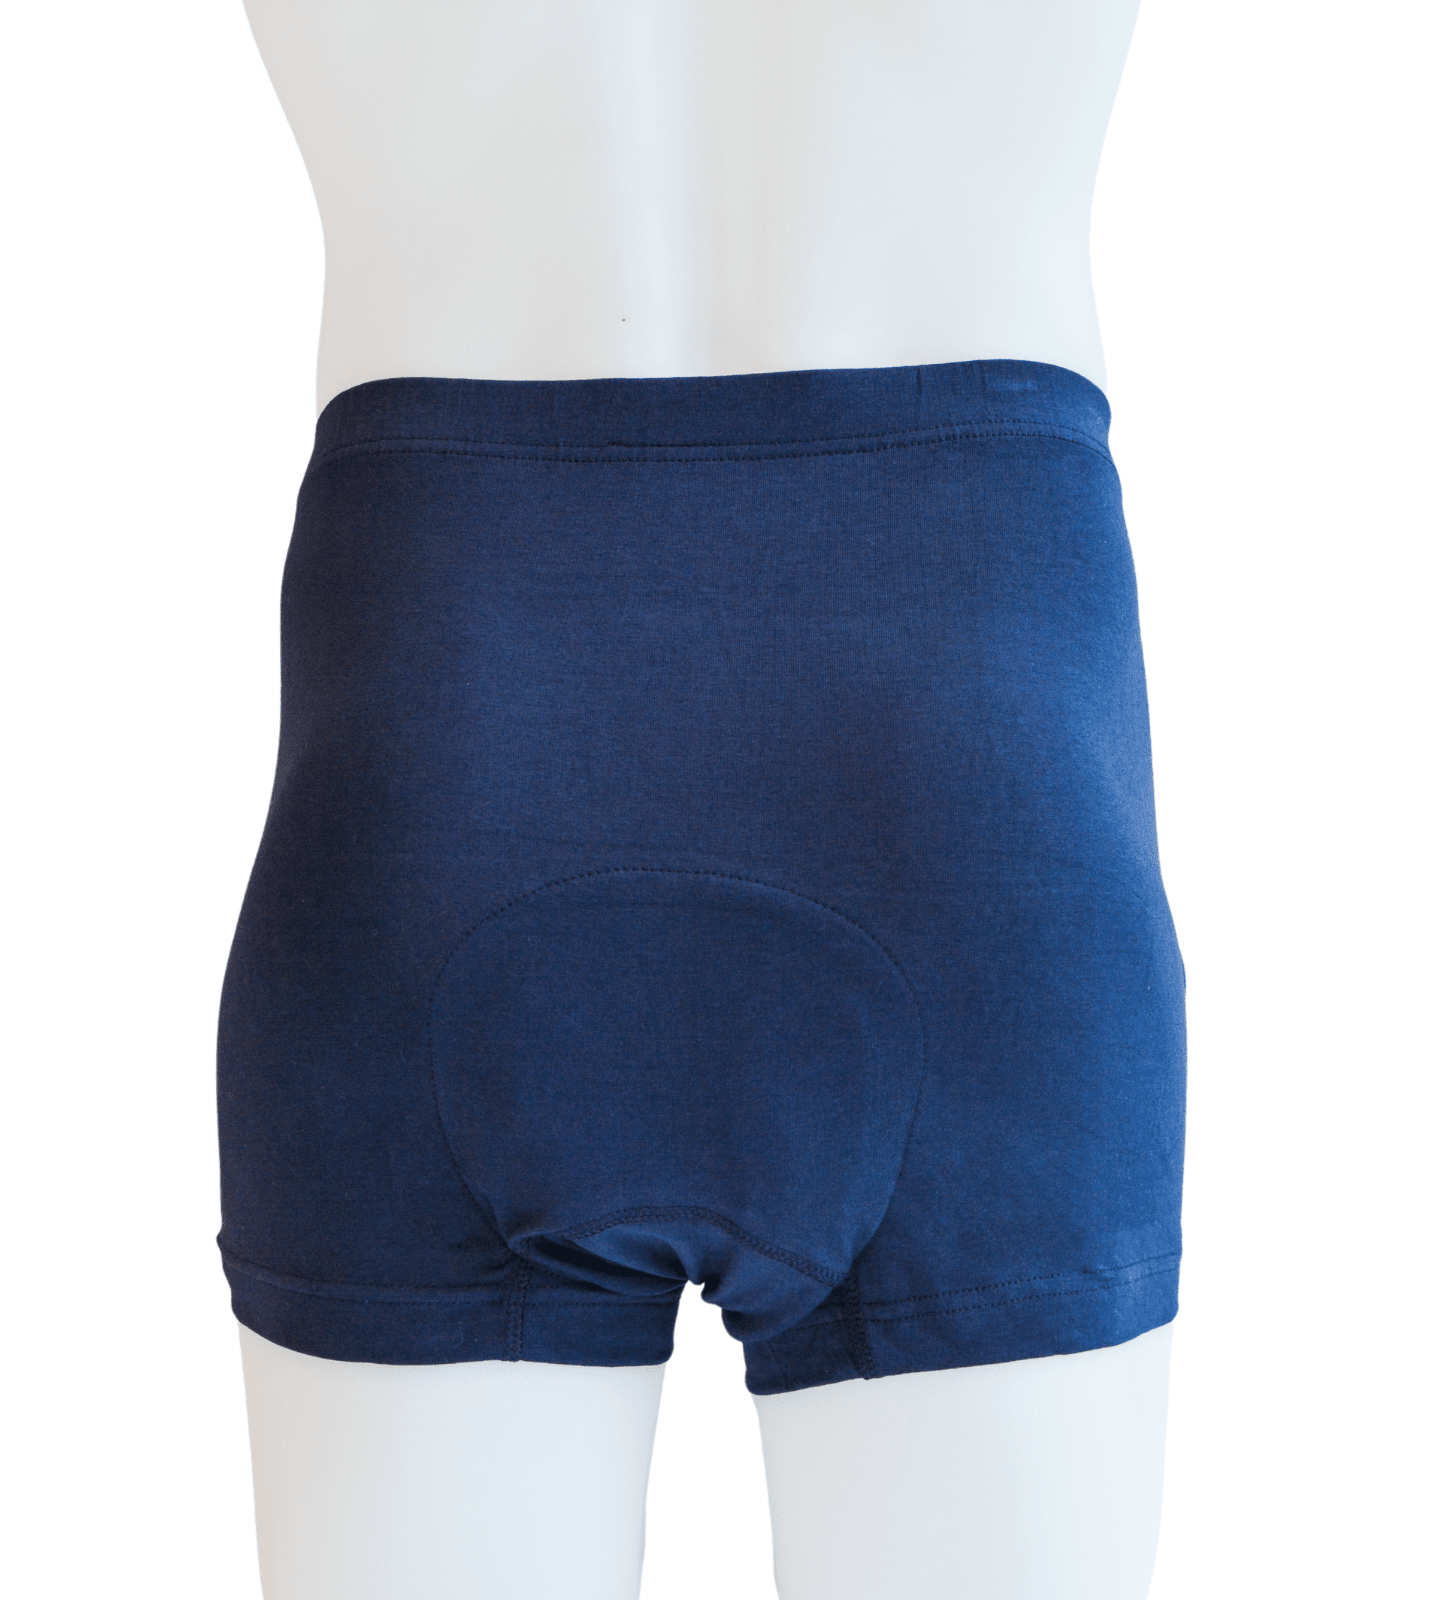 Men's Absorbent Cotton Underwear - Brolly Sheets NZ